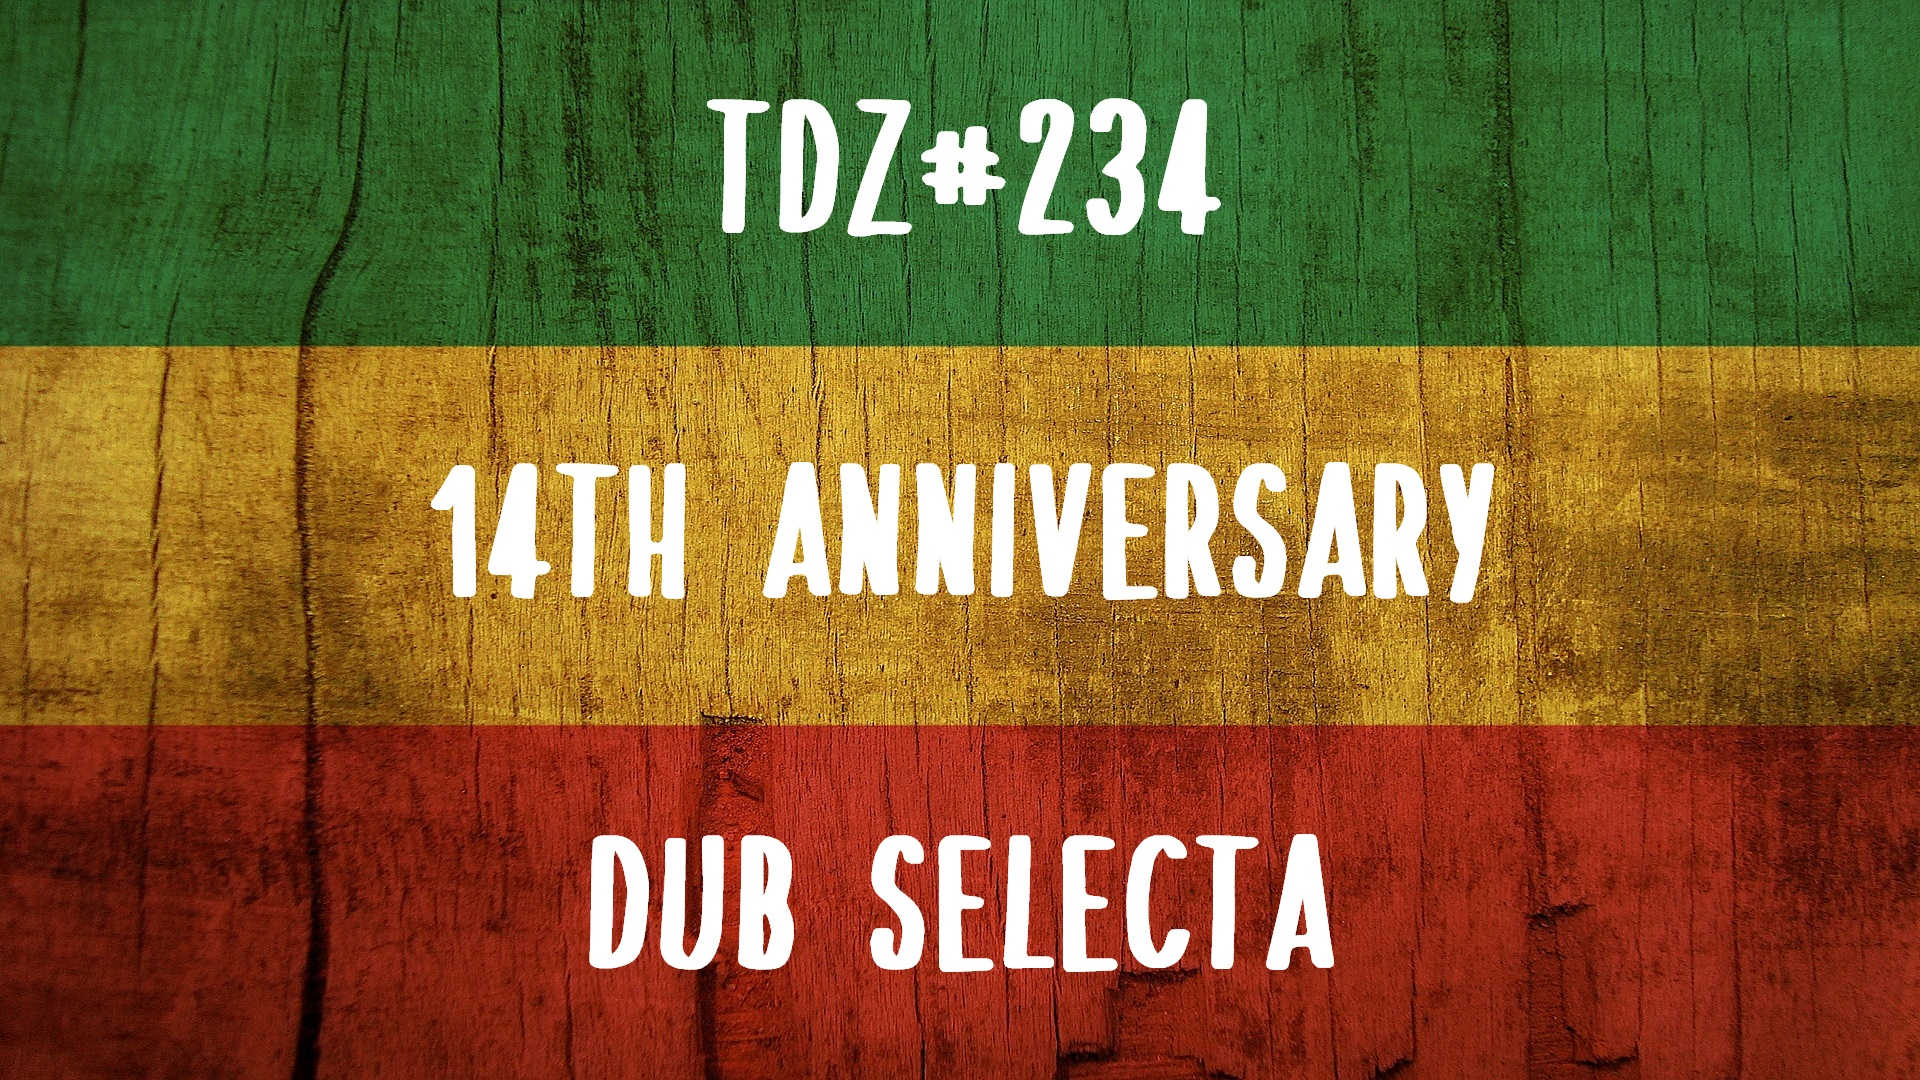 TDZ#234... 14th Anniversary Dub Selecta.....